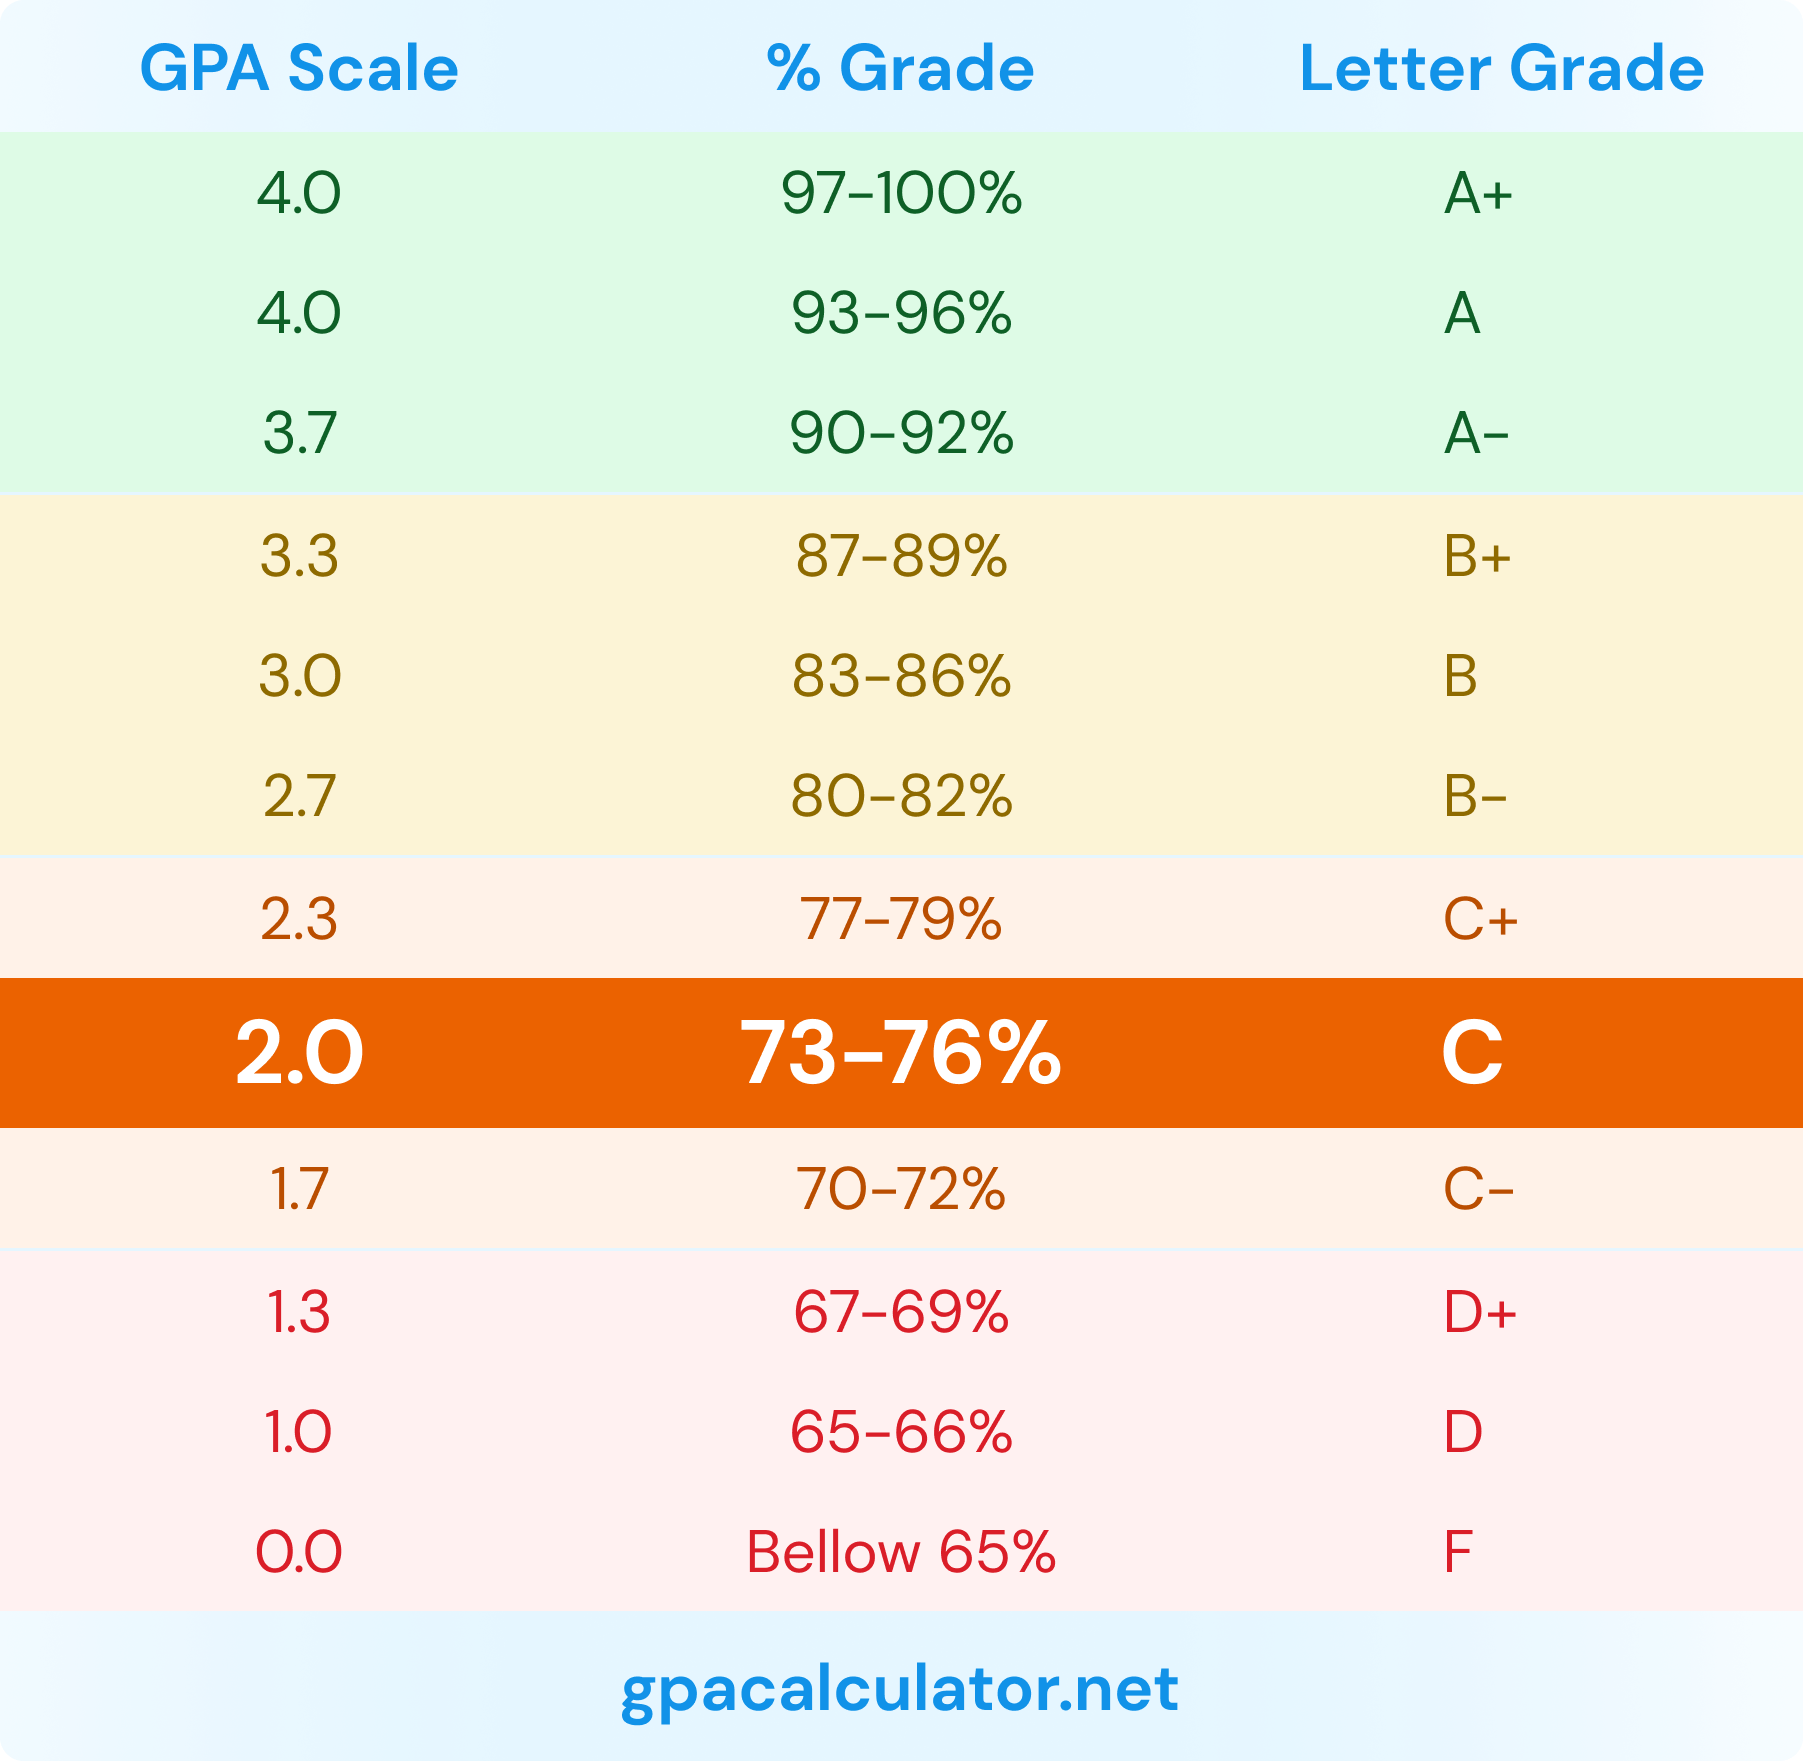 2-0-gpa-is-equivalent-to-73-76-percentile-grade-or-c-letter-grade